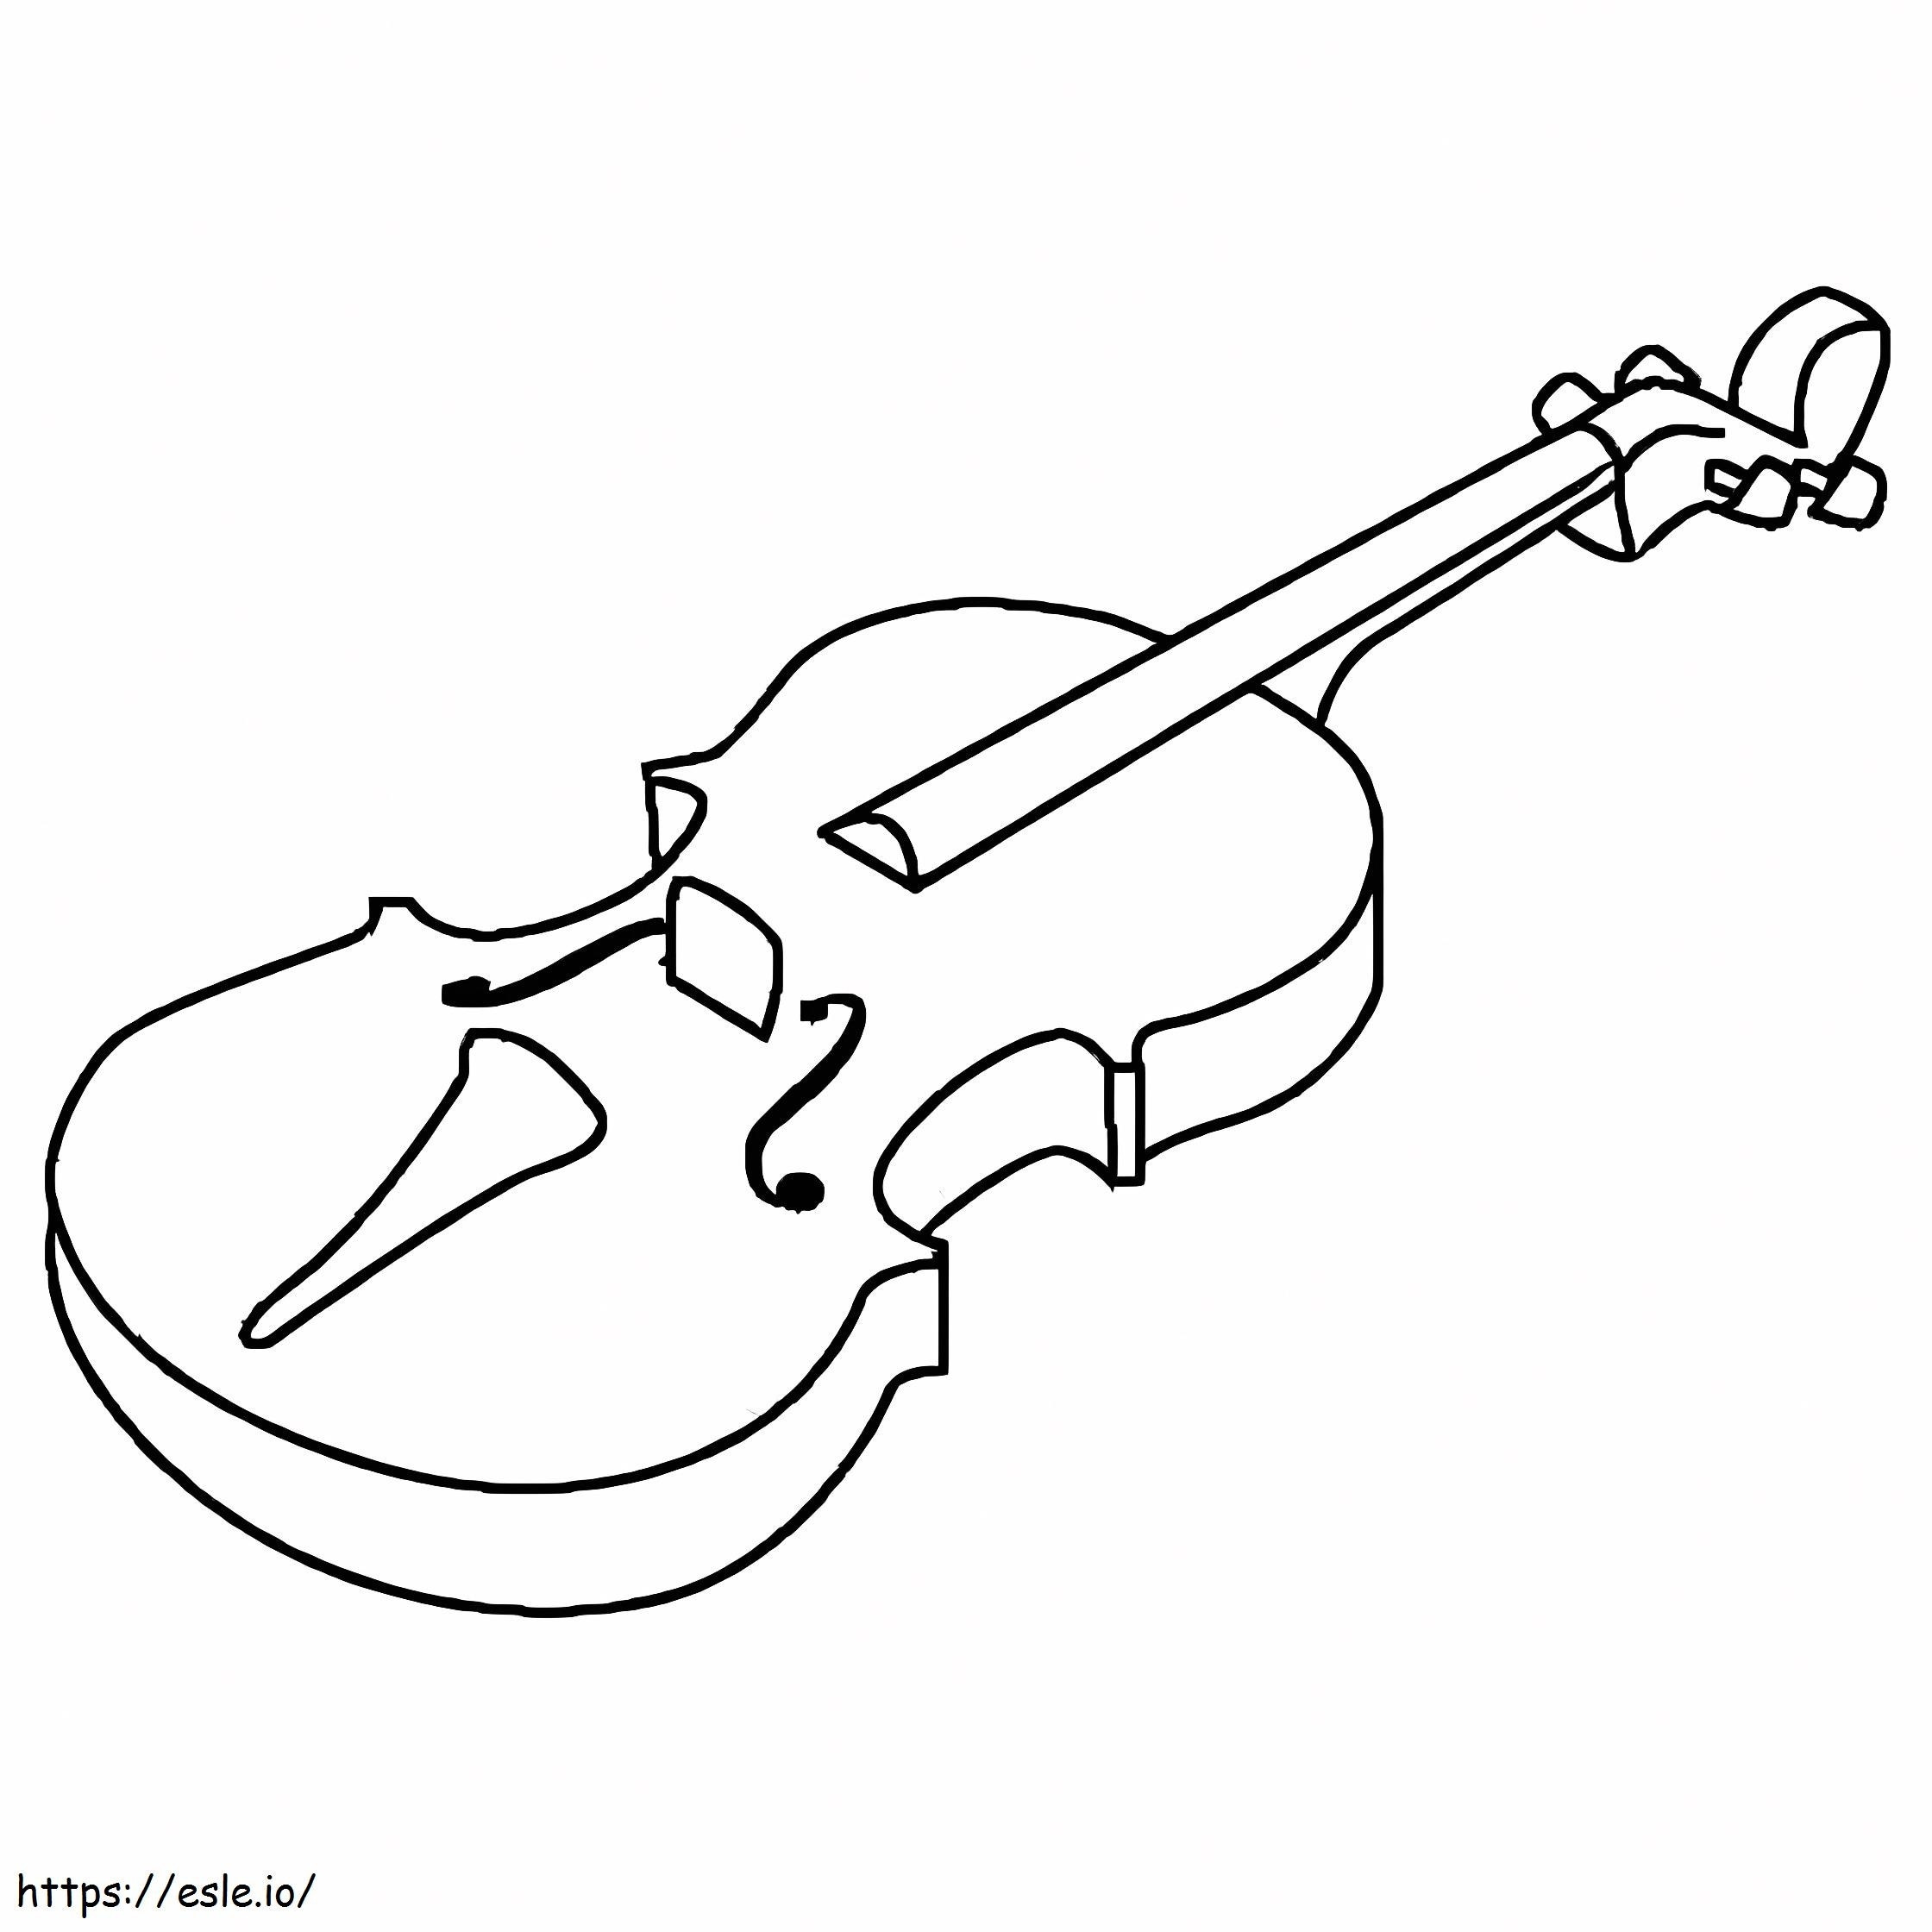 Amazing Violin coloring page